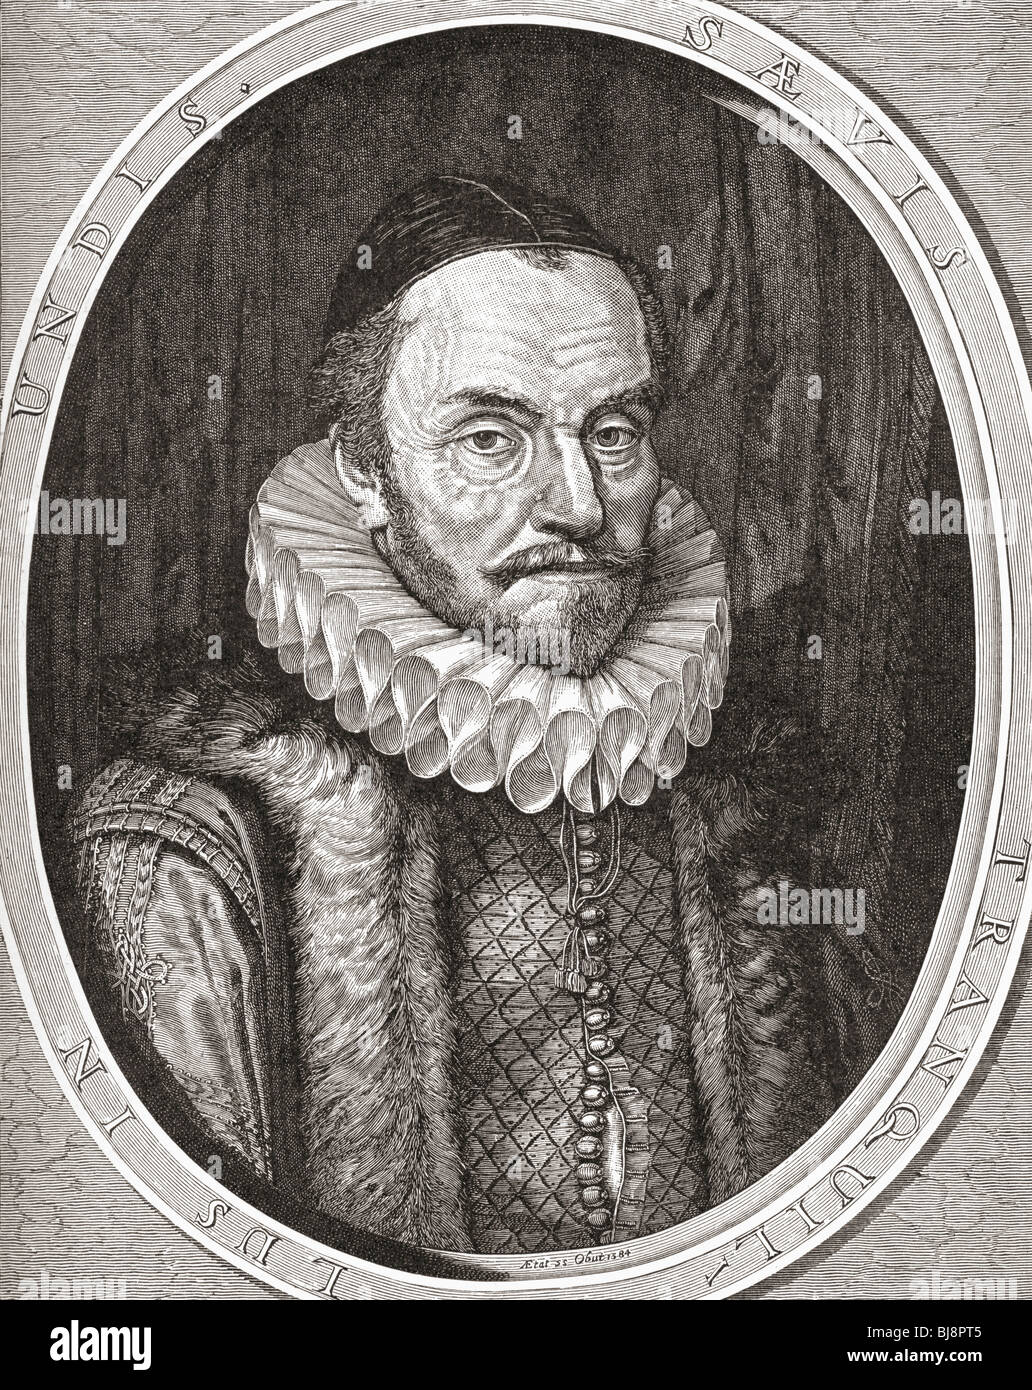 William I, Prince of Orange, 1533 to 1584. Also known as William the Silent or William of Orange. Stock Photo